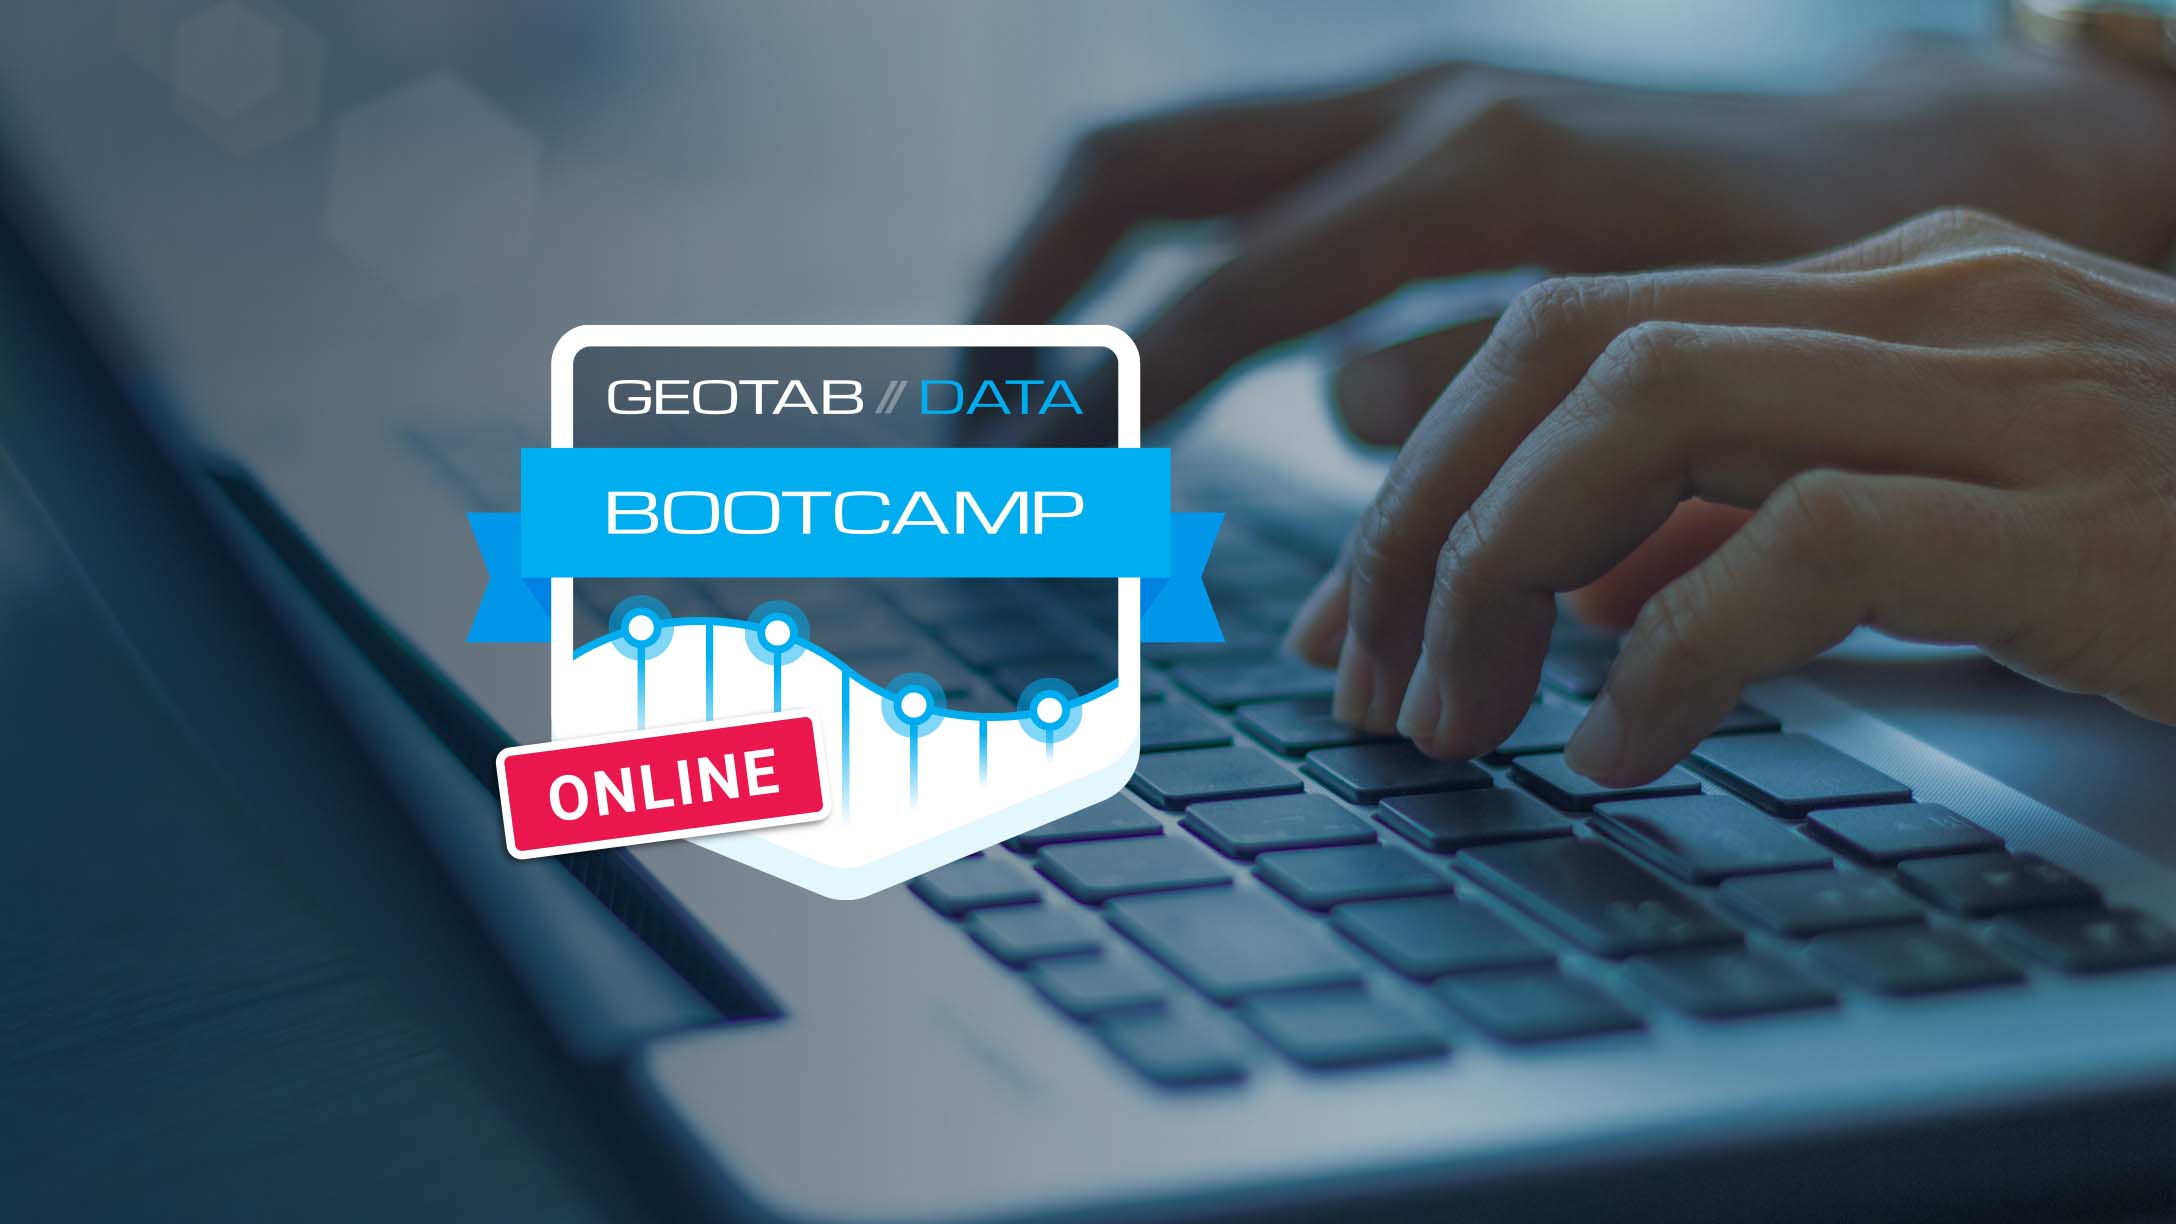 Geotab Data Bootcamp November 2020 logo